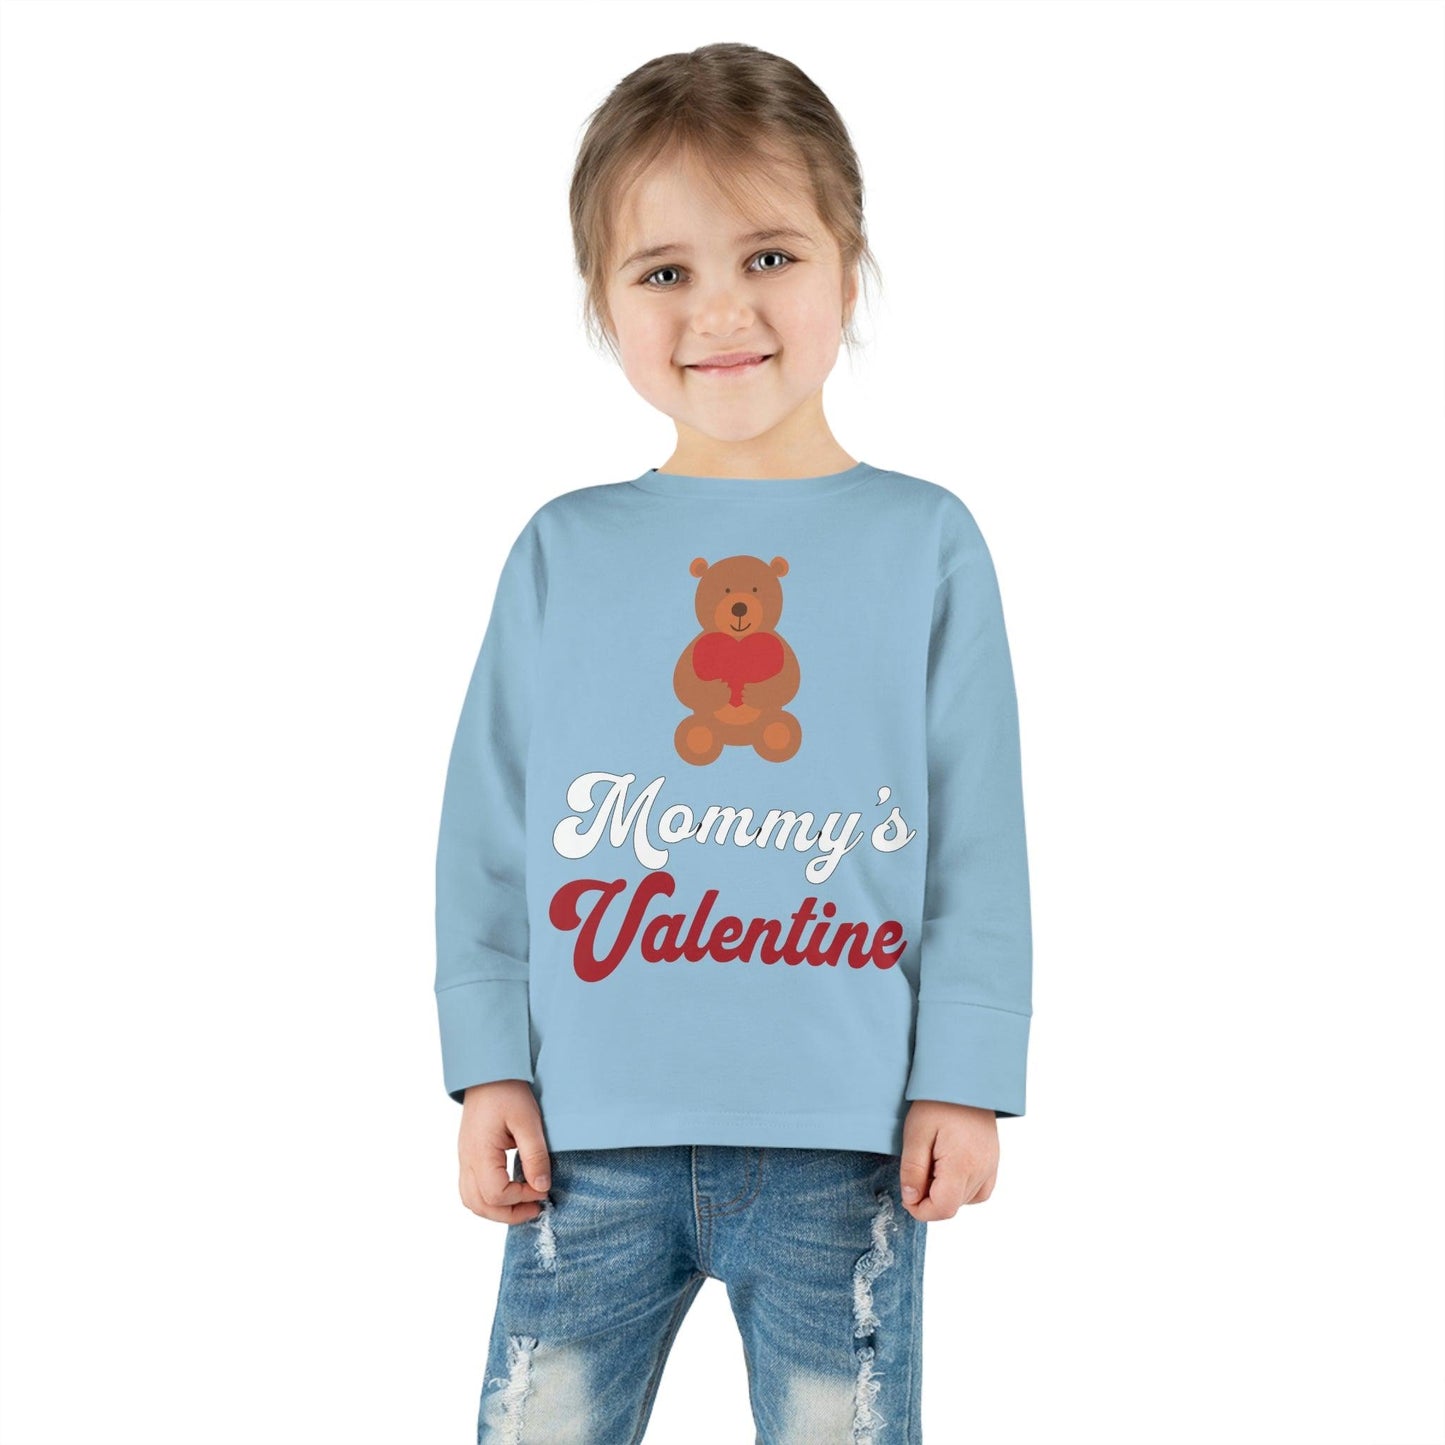 Mommy's Valentine - Kids Valentine day shirt